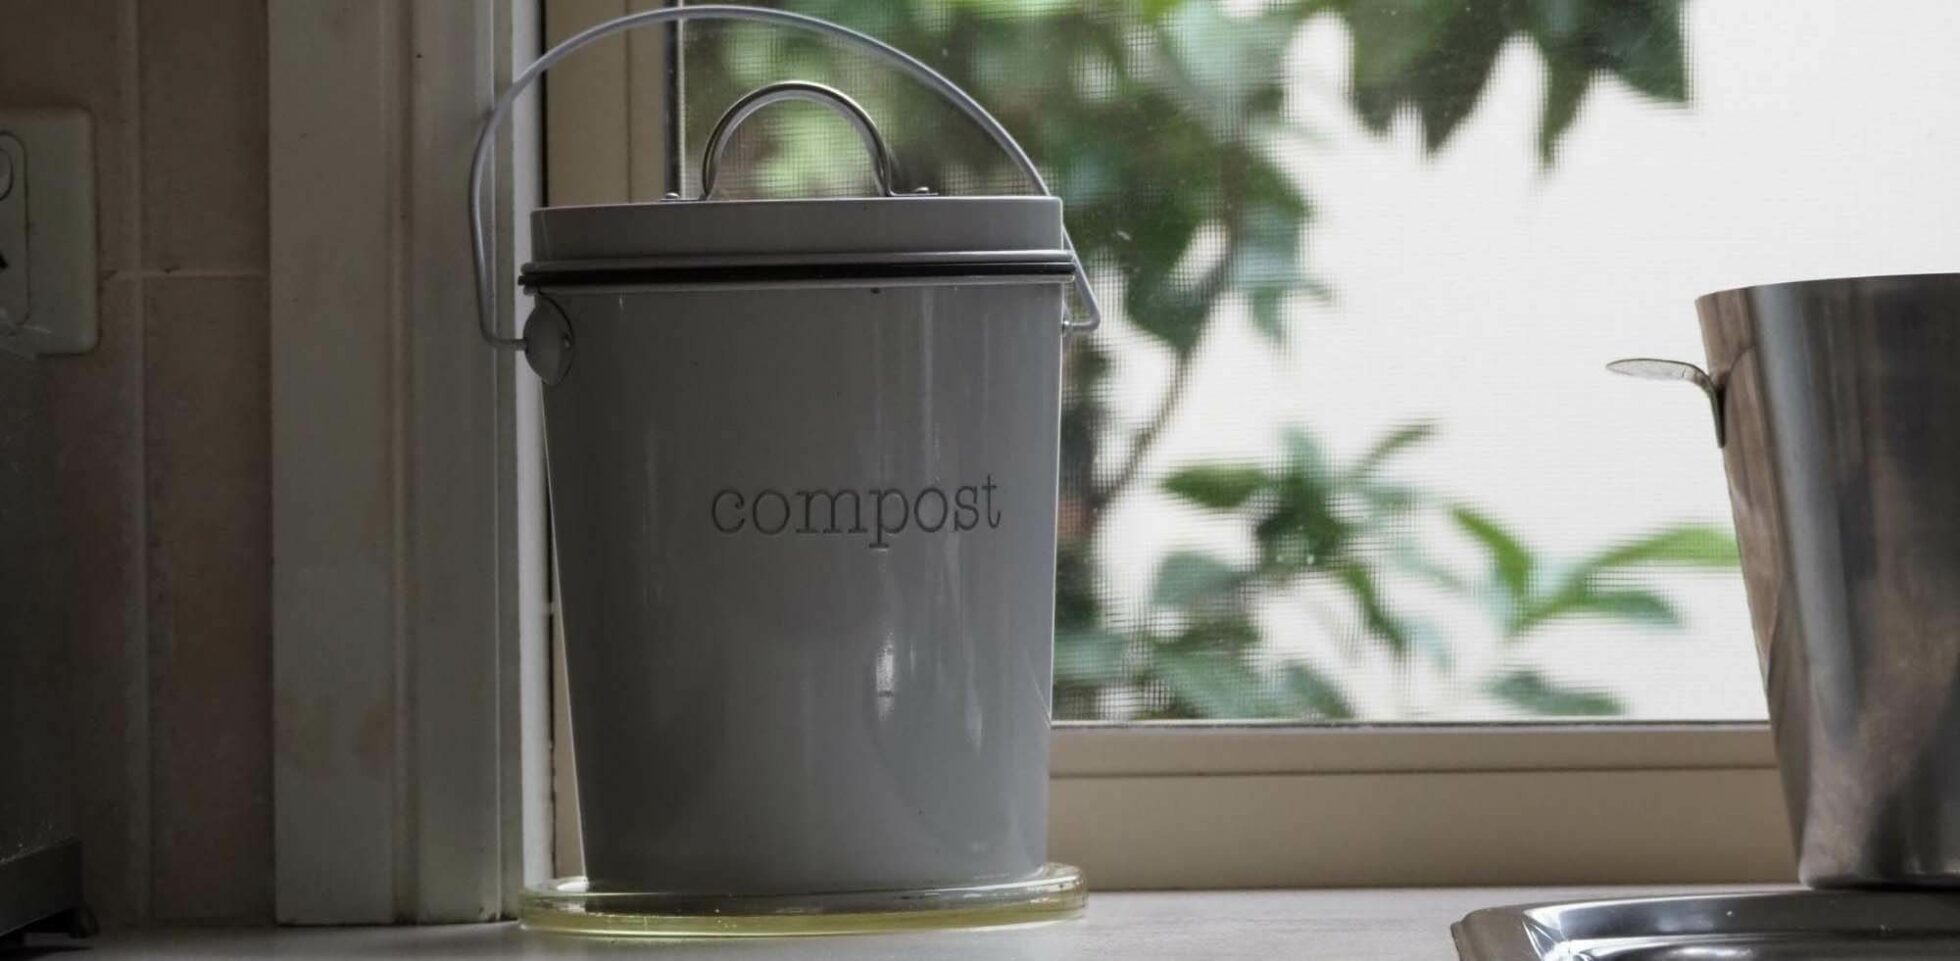 RED FACTOR Premium Seau Compost Inodore en Acier Inoxydable pour